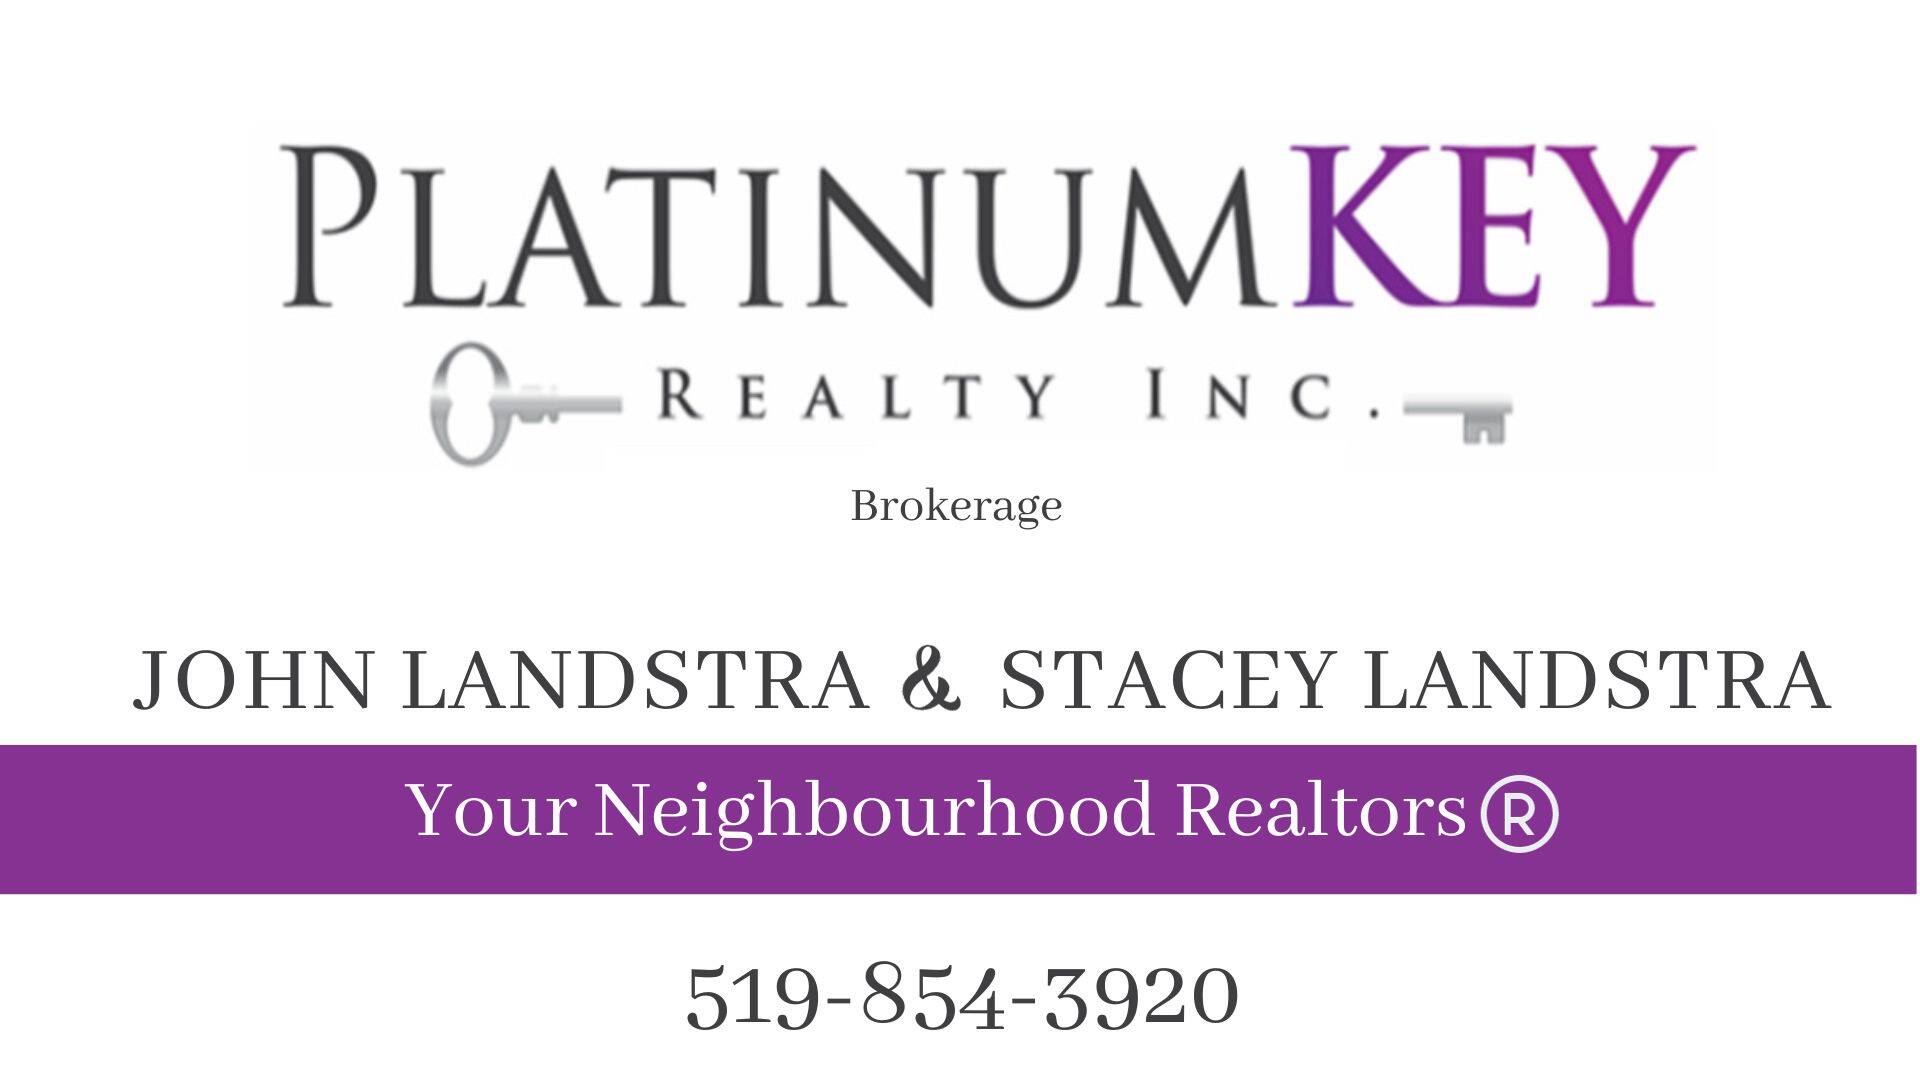 Platinum Key Realty Inc